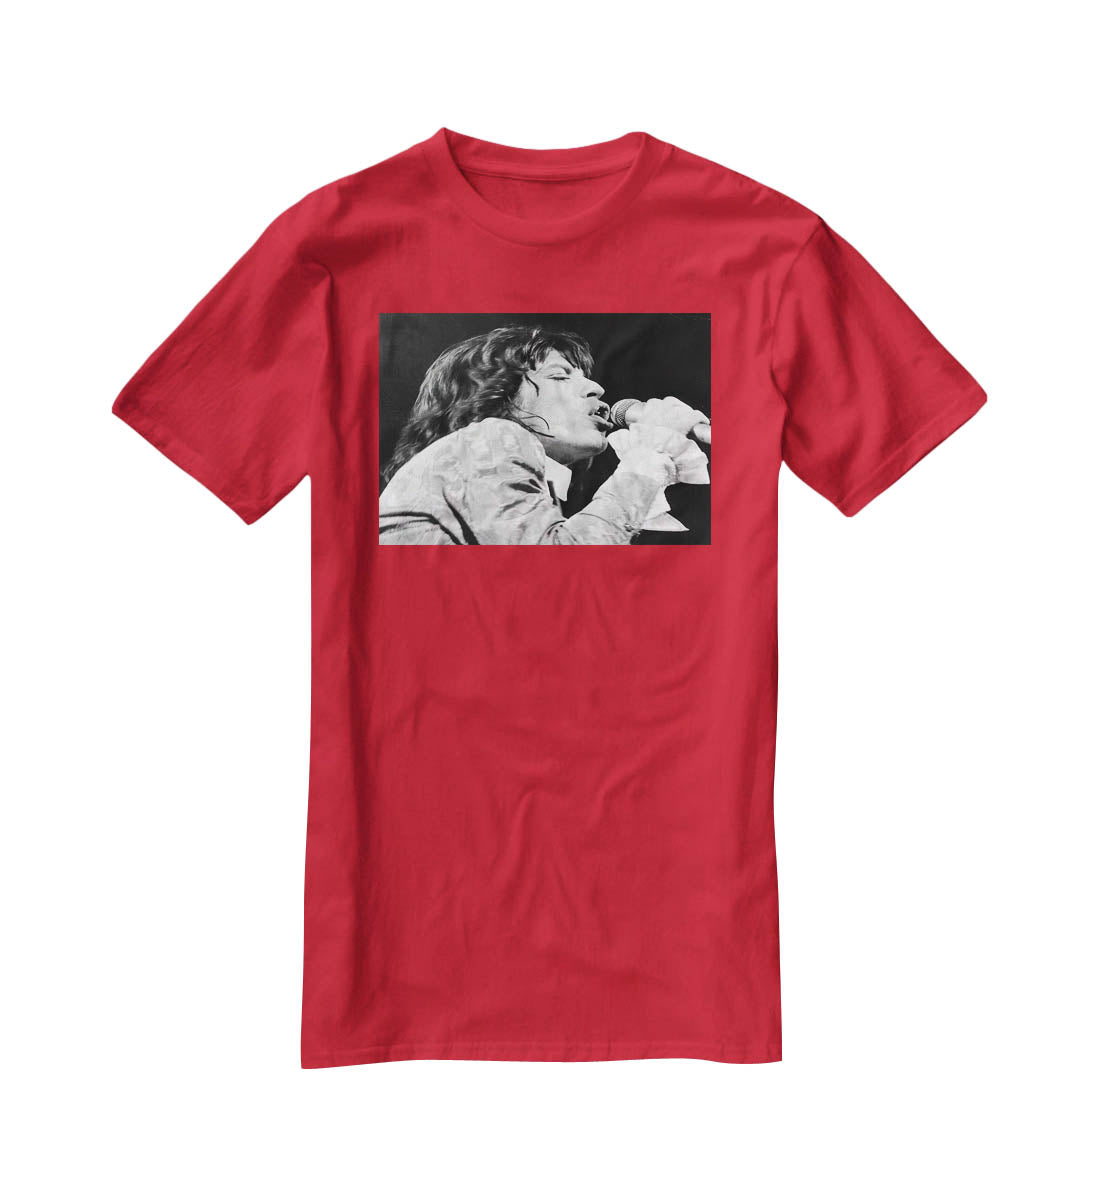 Mick Jagger belts it out T-Shirt - Canvas Art Rocks - 4